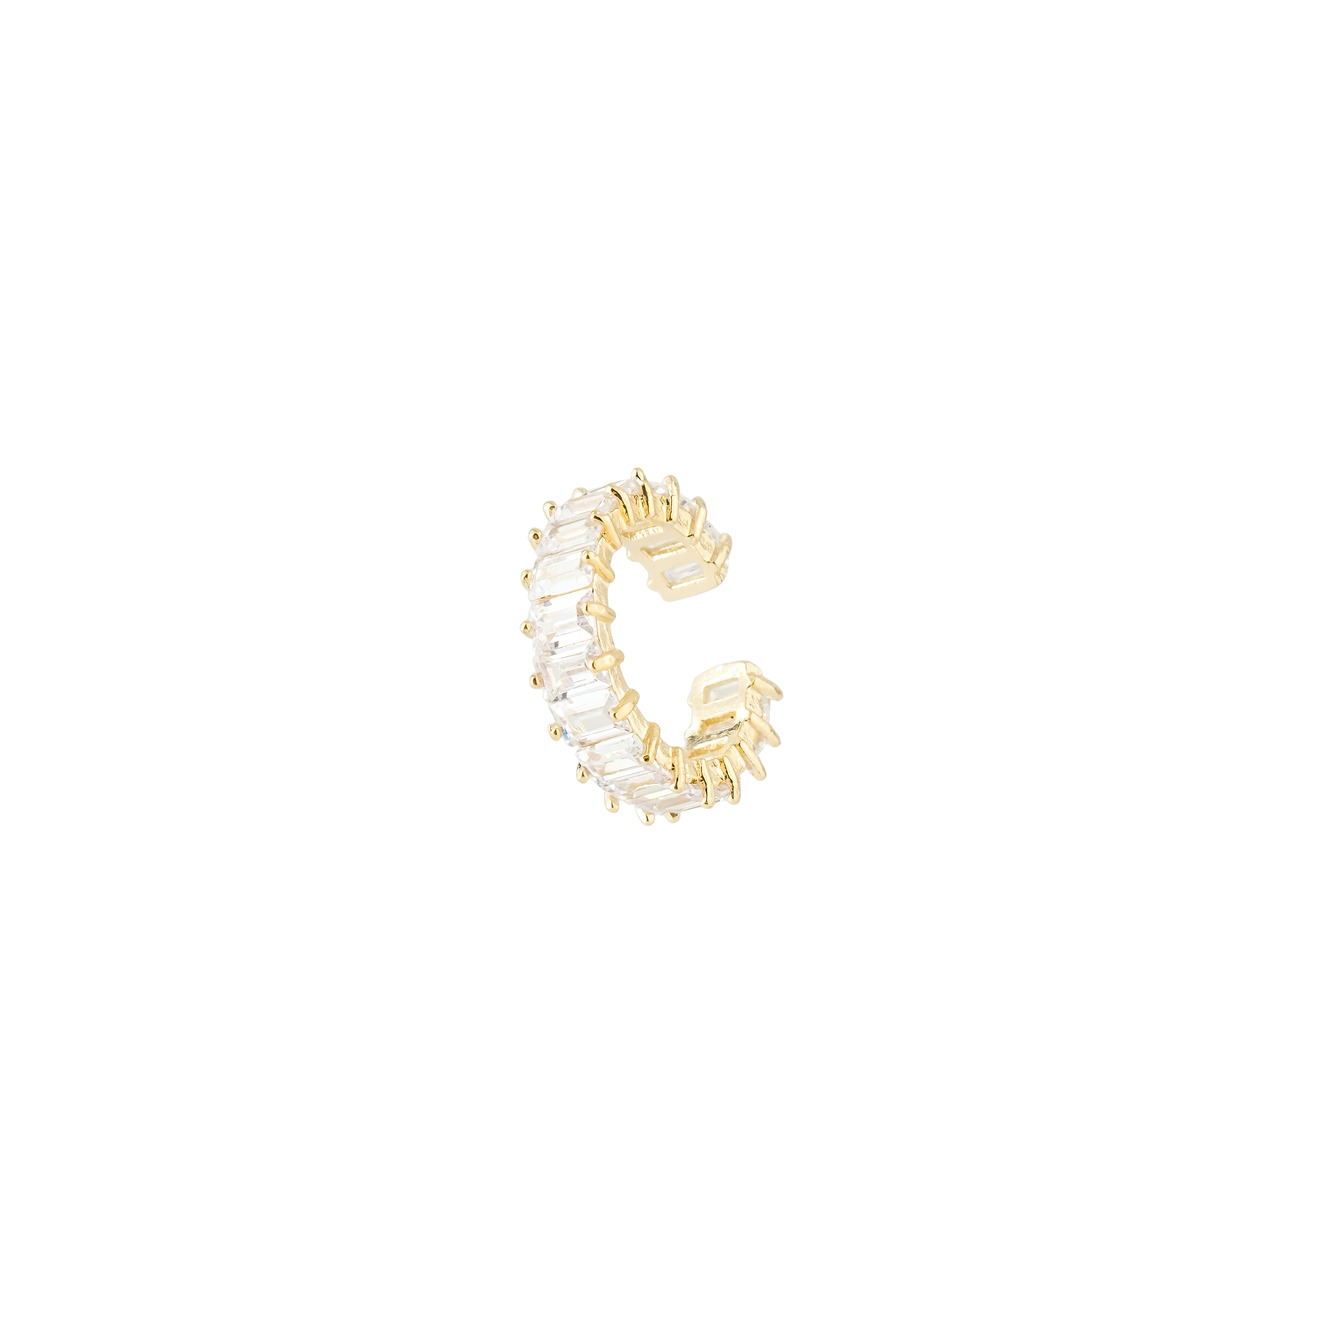 Herald Percy Золотистый кафф с белыми кристаллами herald percy золотистый браслет с кристаллами